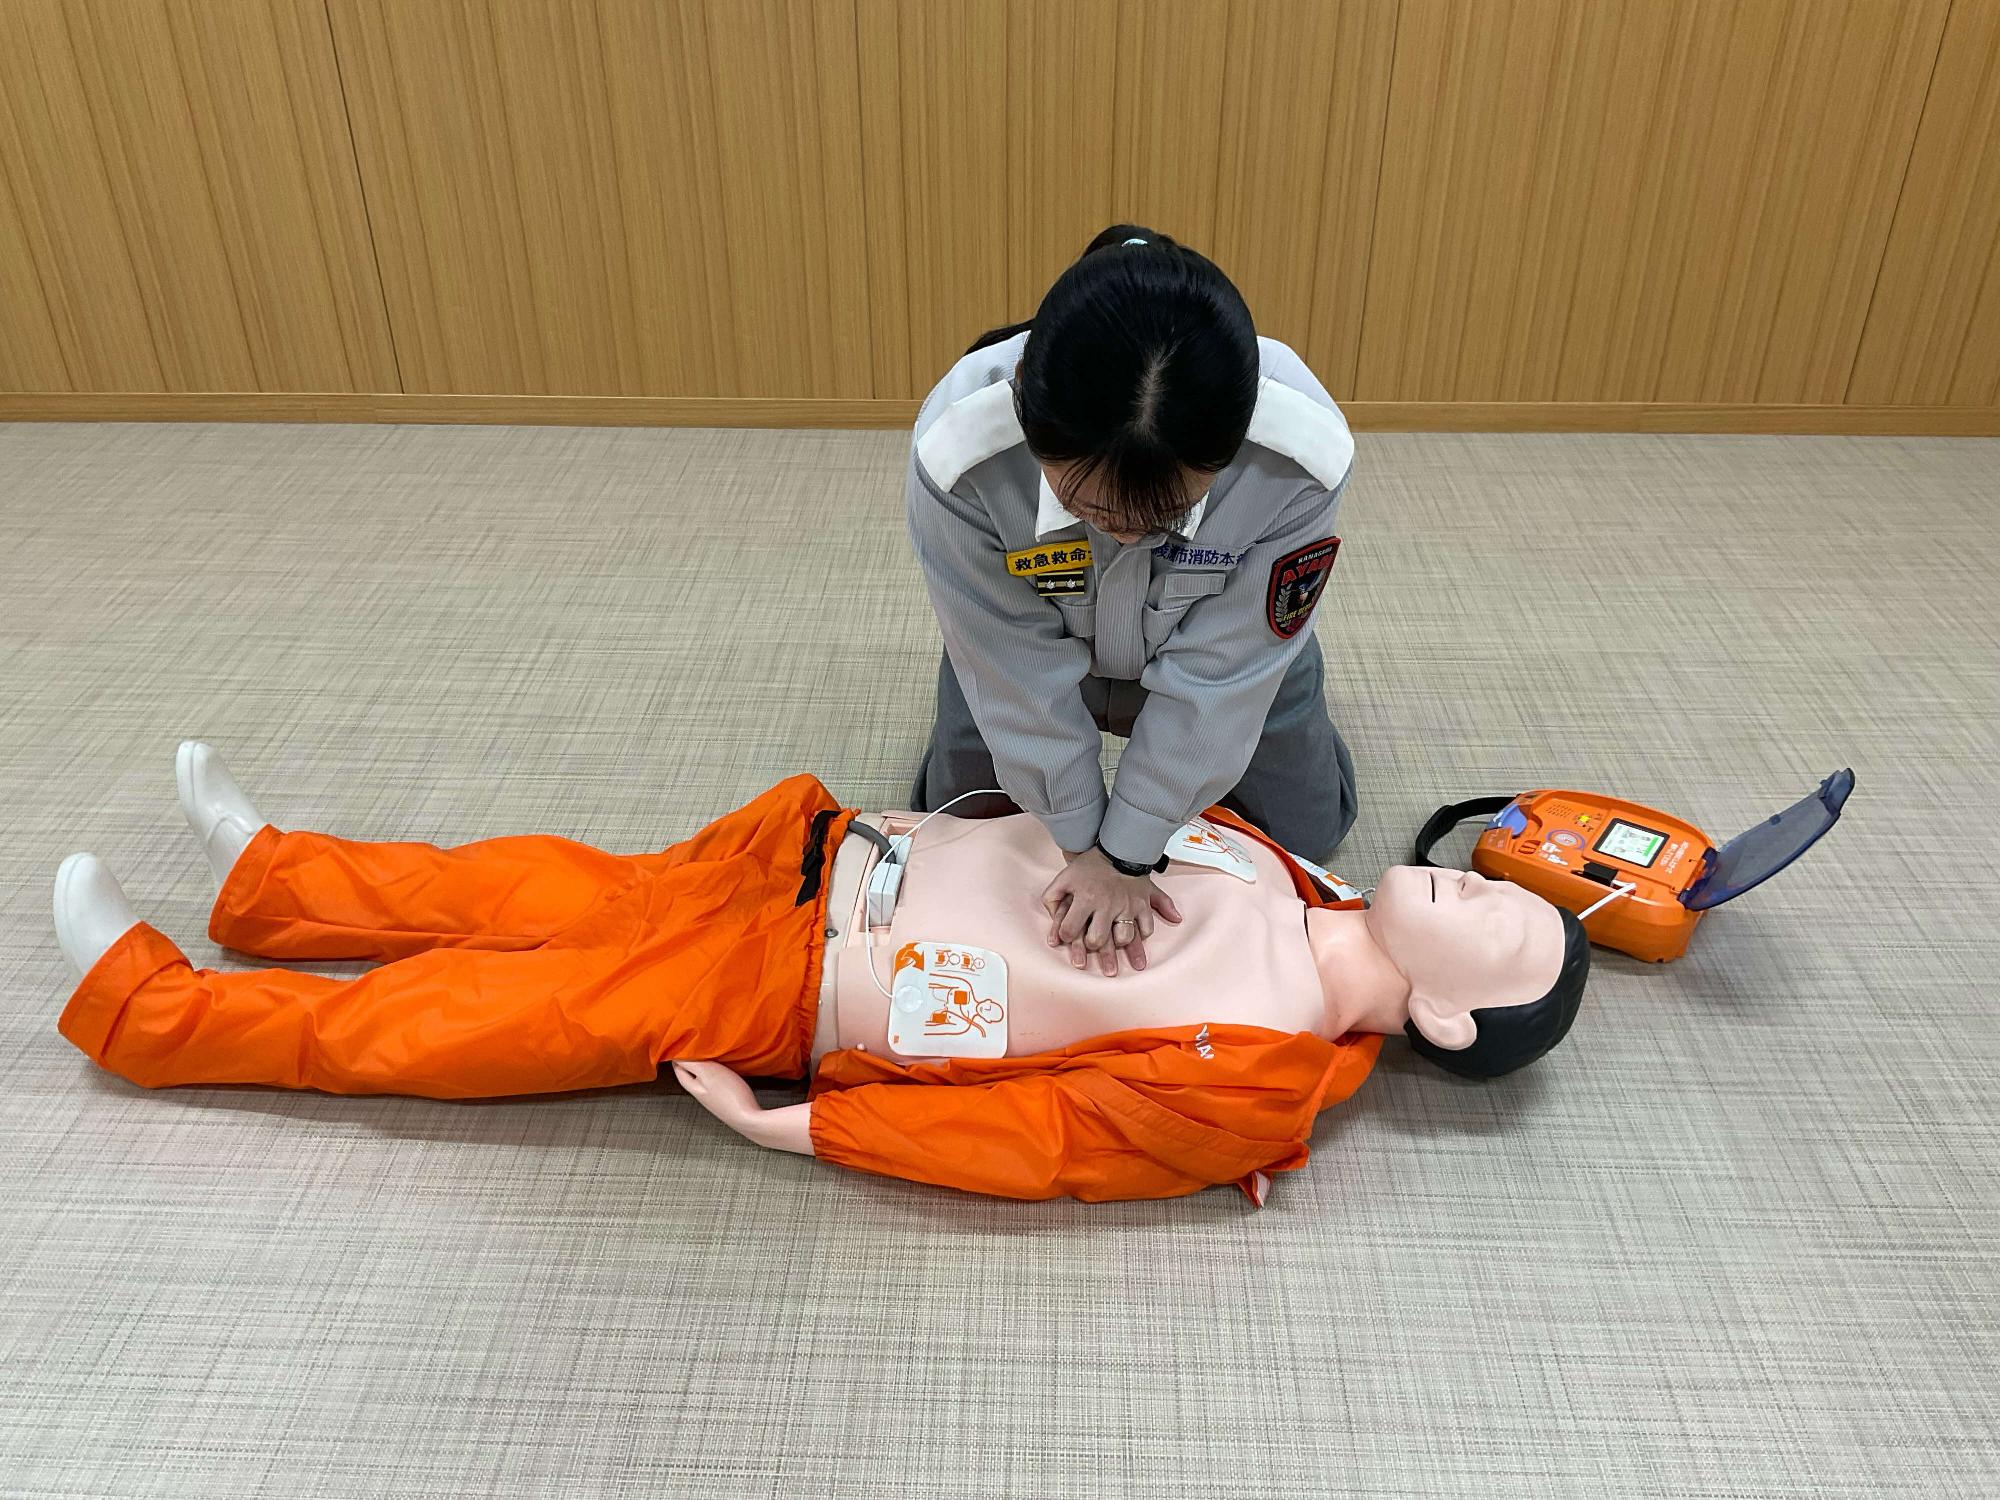 AEDのパッドが貼られた状態で胸骨圧迫を行っている写真